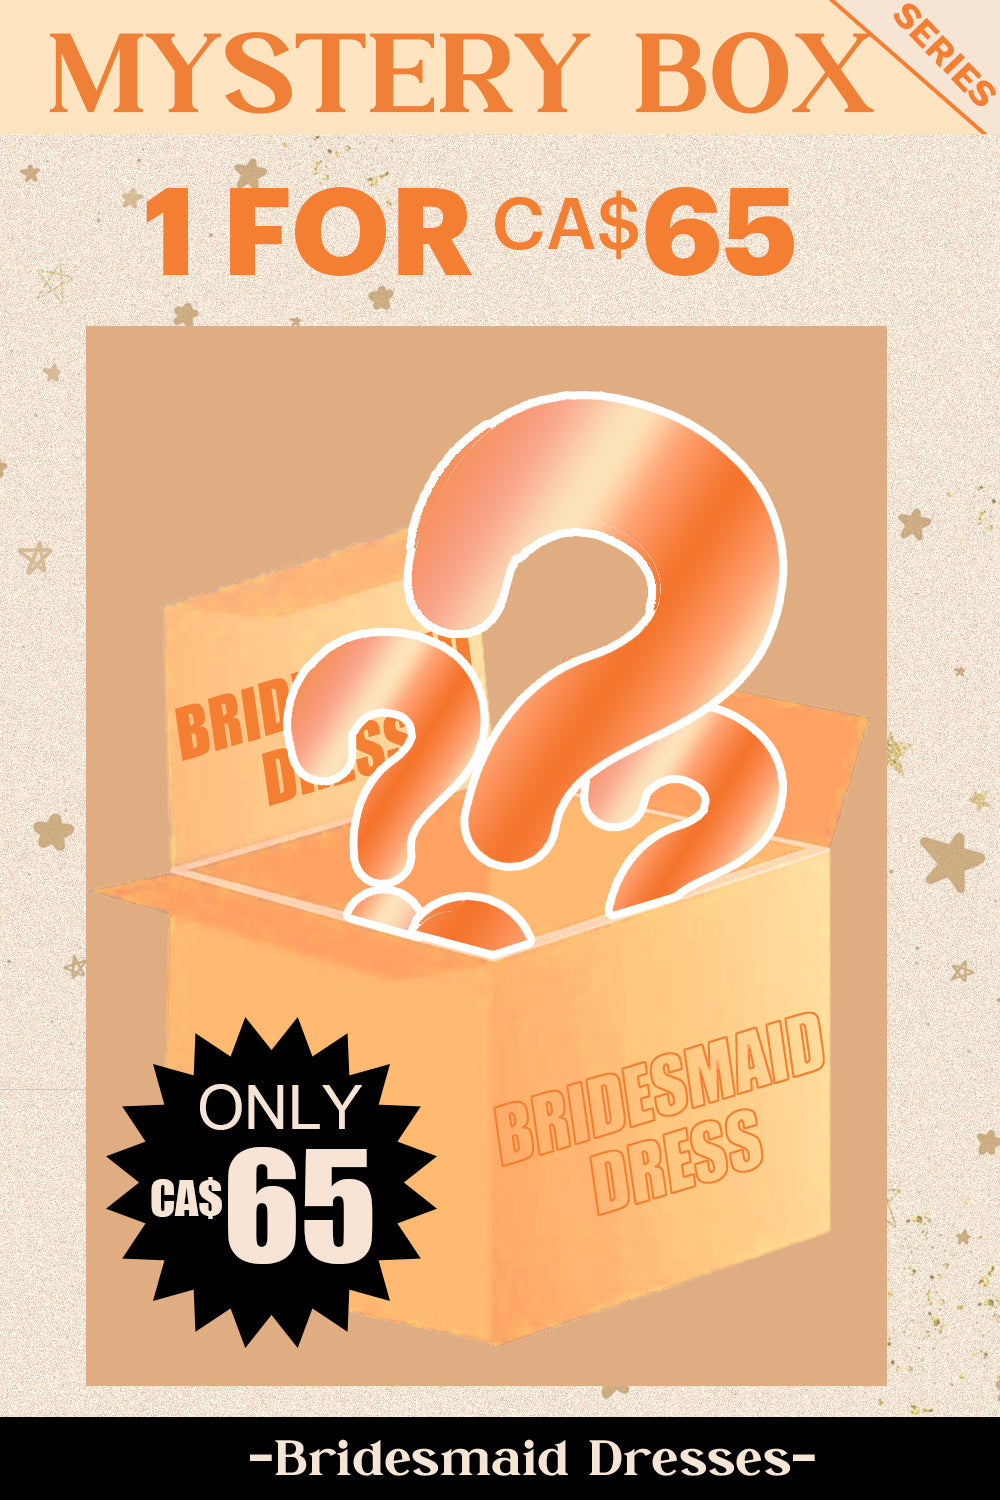 ZAPAKA MYSTERY BOX of 1Pc Bridesmaid Dress